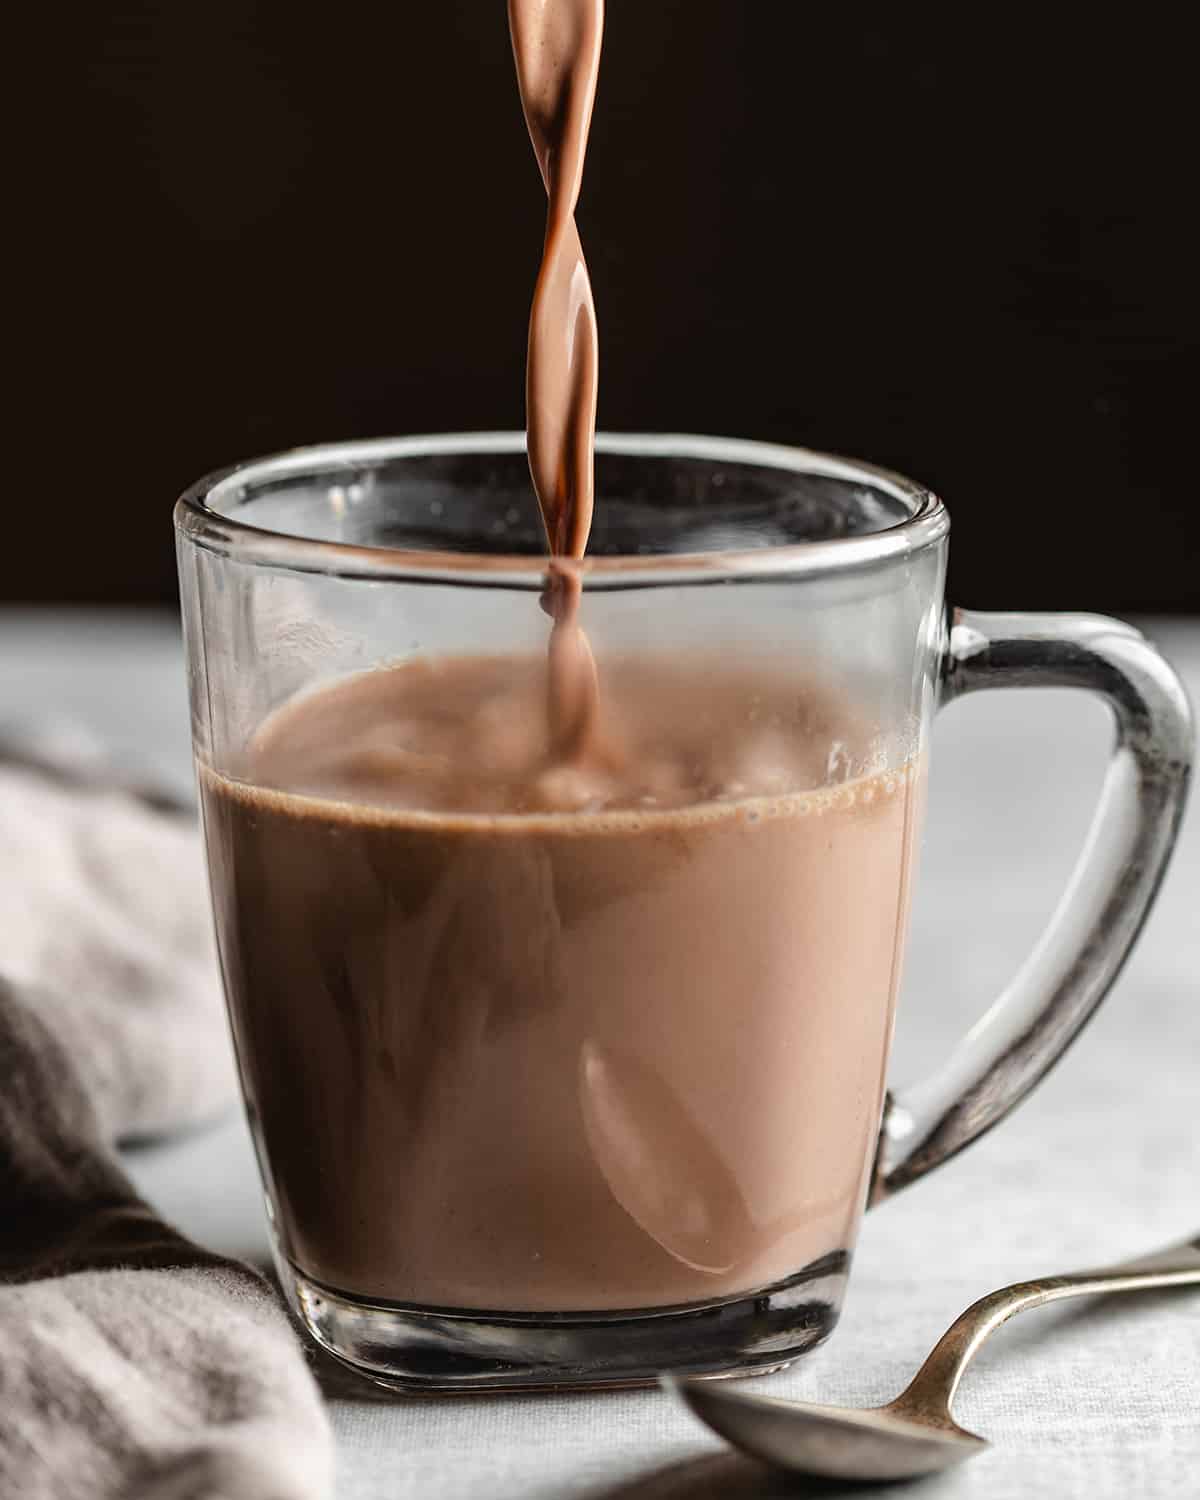 Crockpot Hot Chocolate being poured into a glass mug